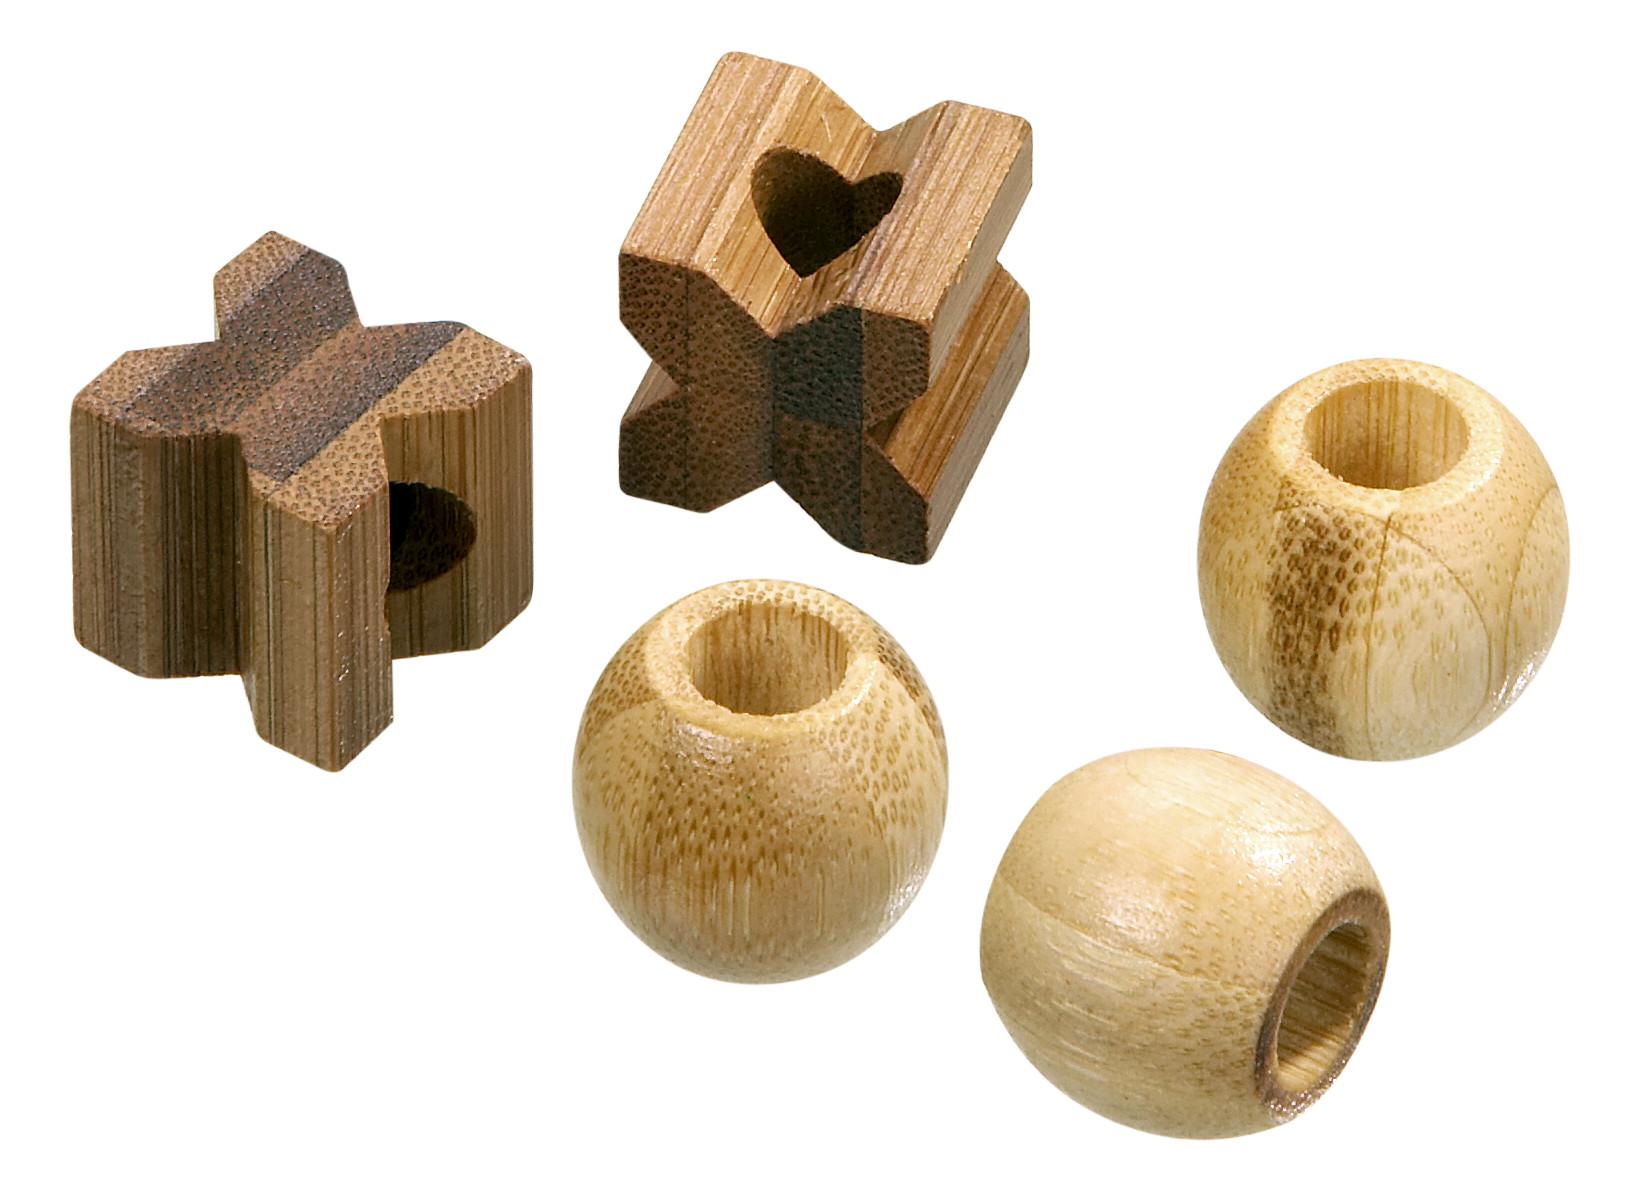 Tic Tac Toe, 3D, bamboo